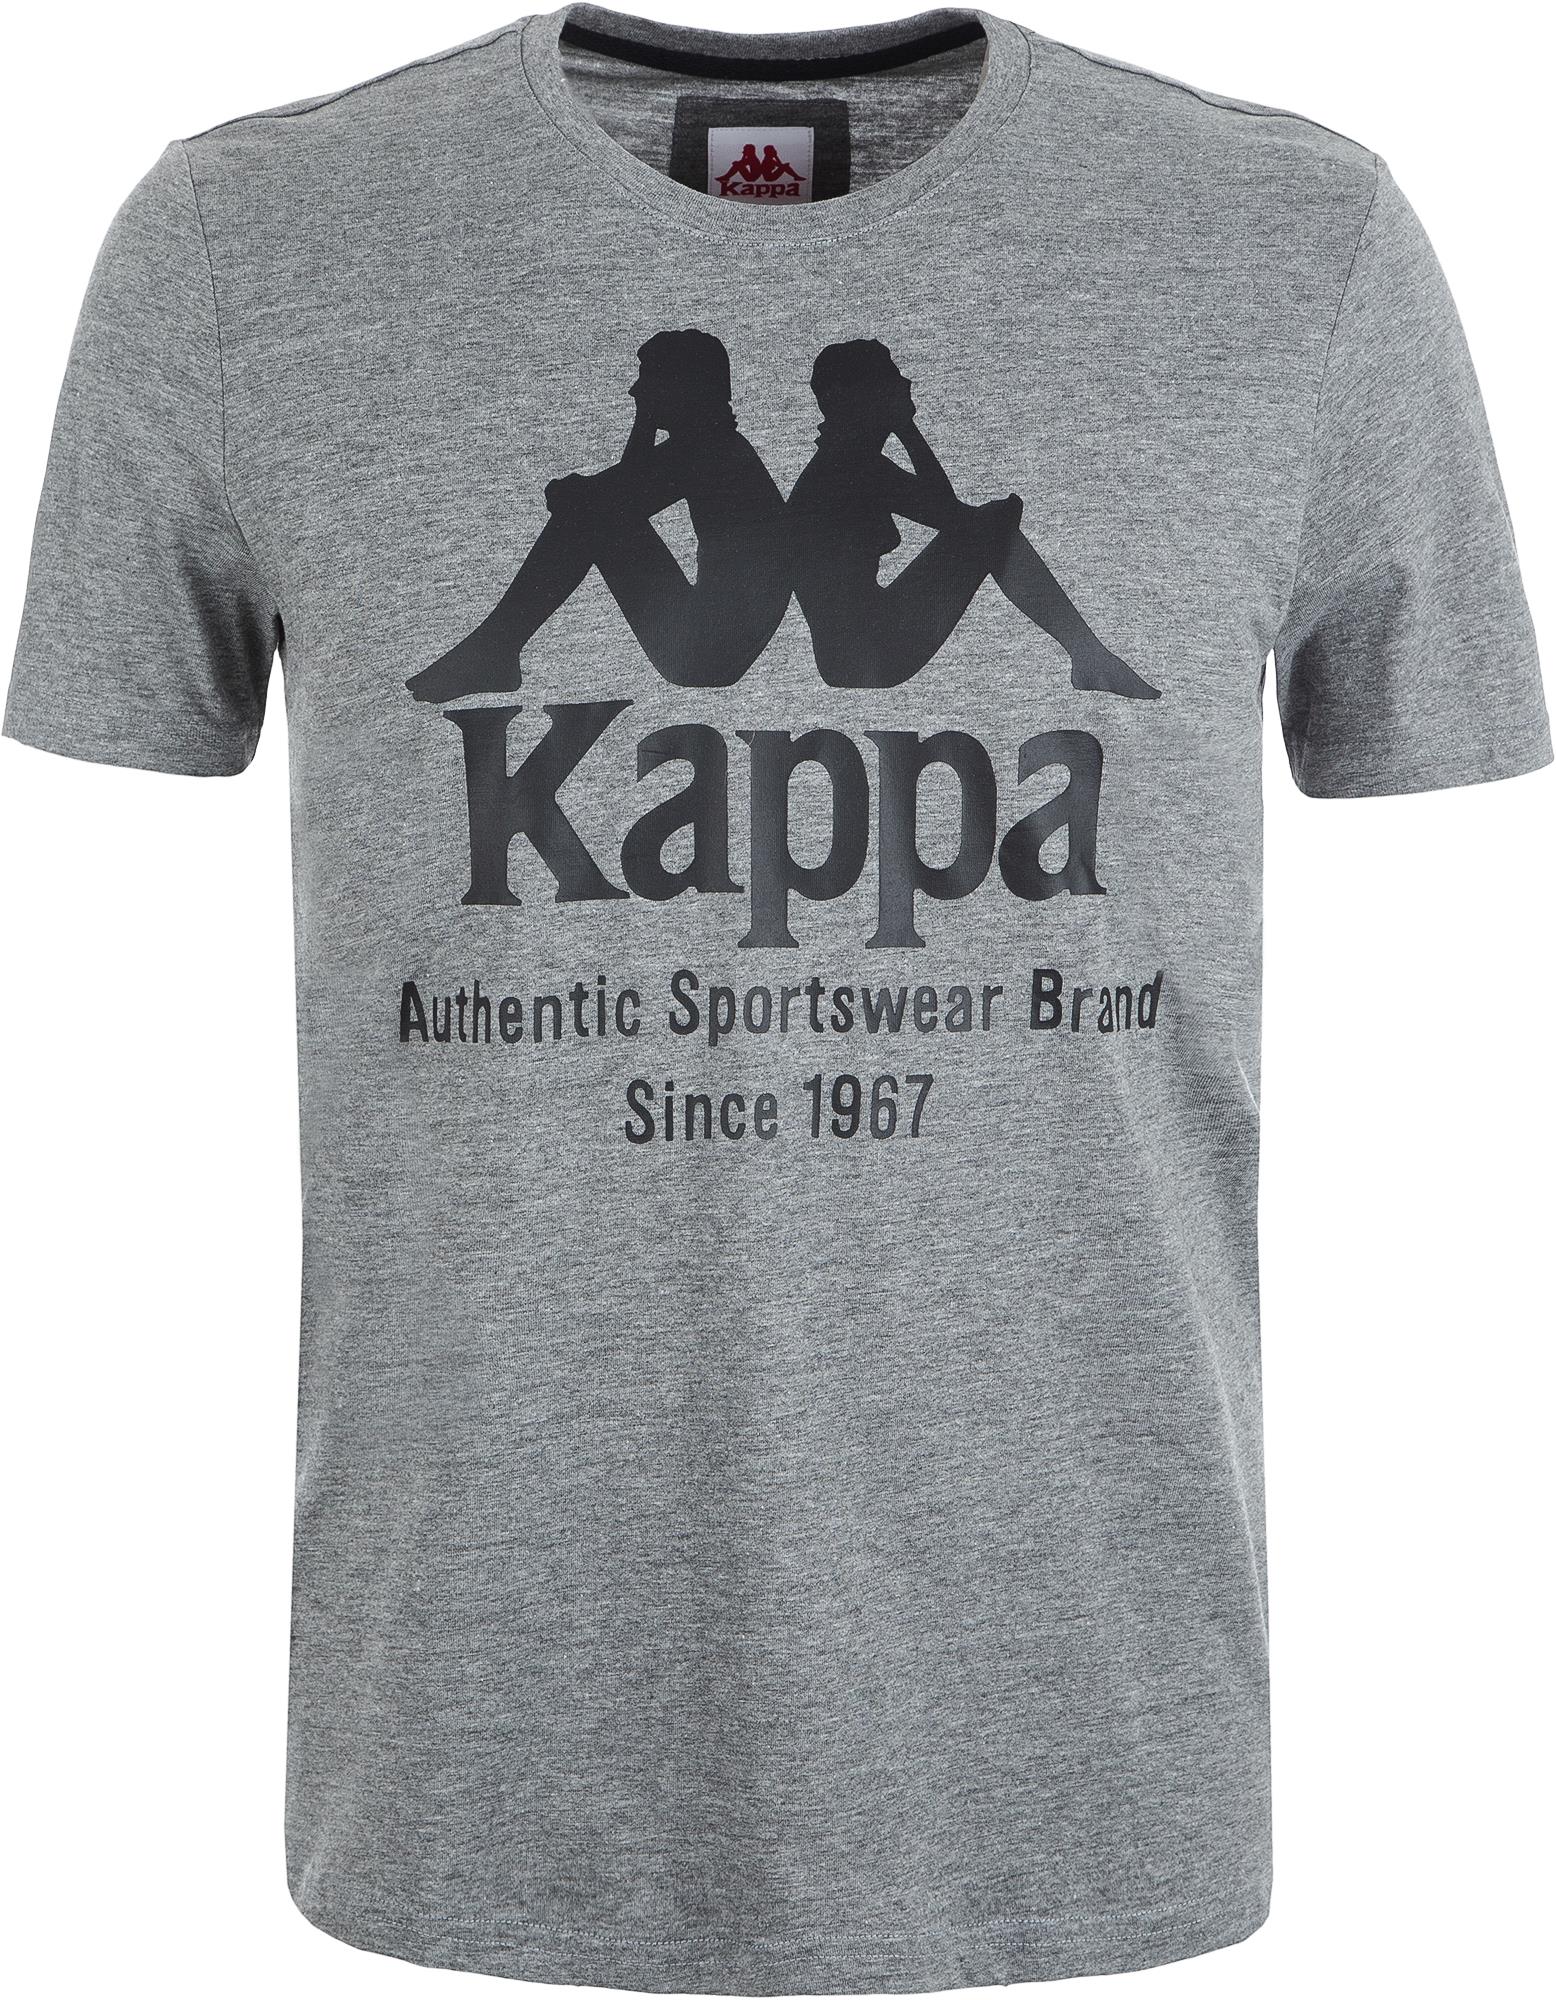 Футболка Kappa мужская authentic